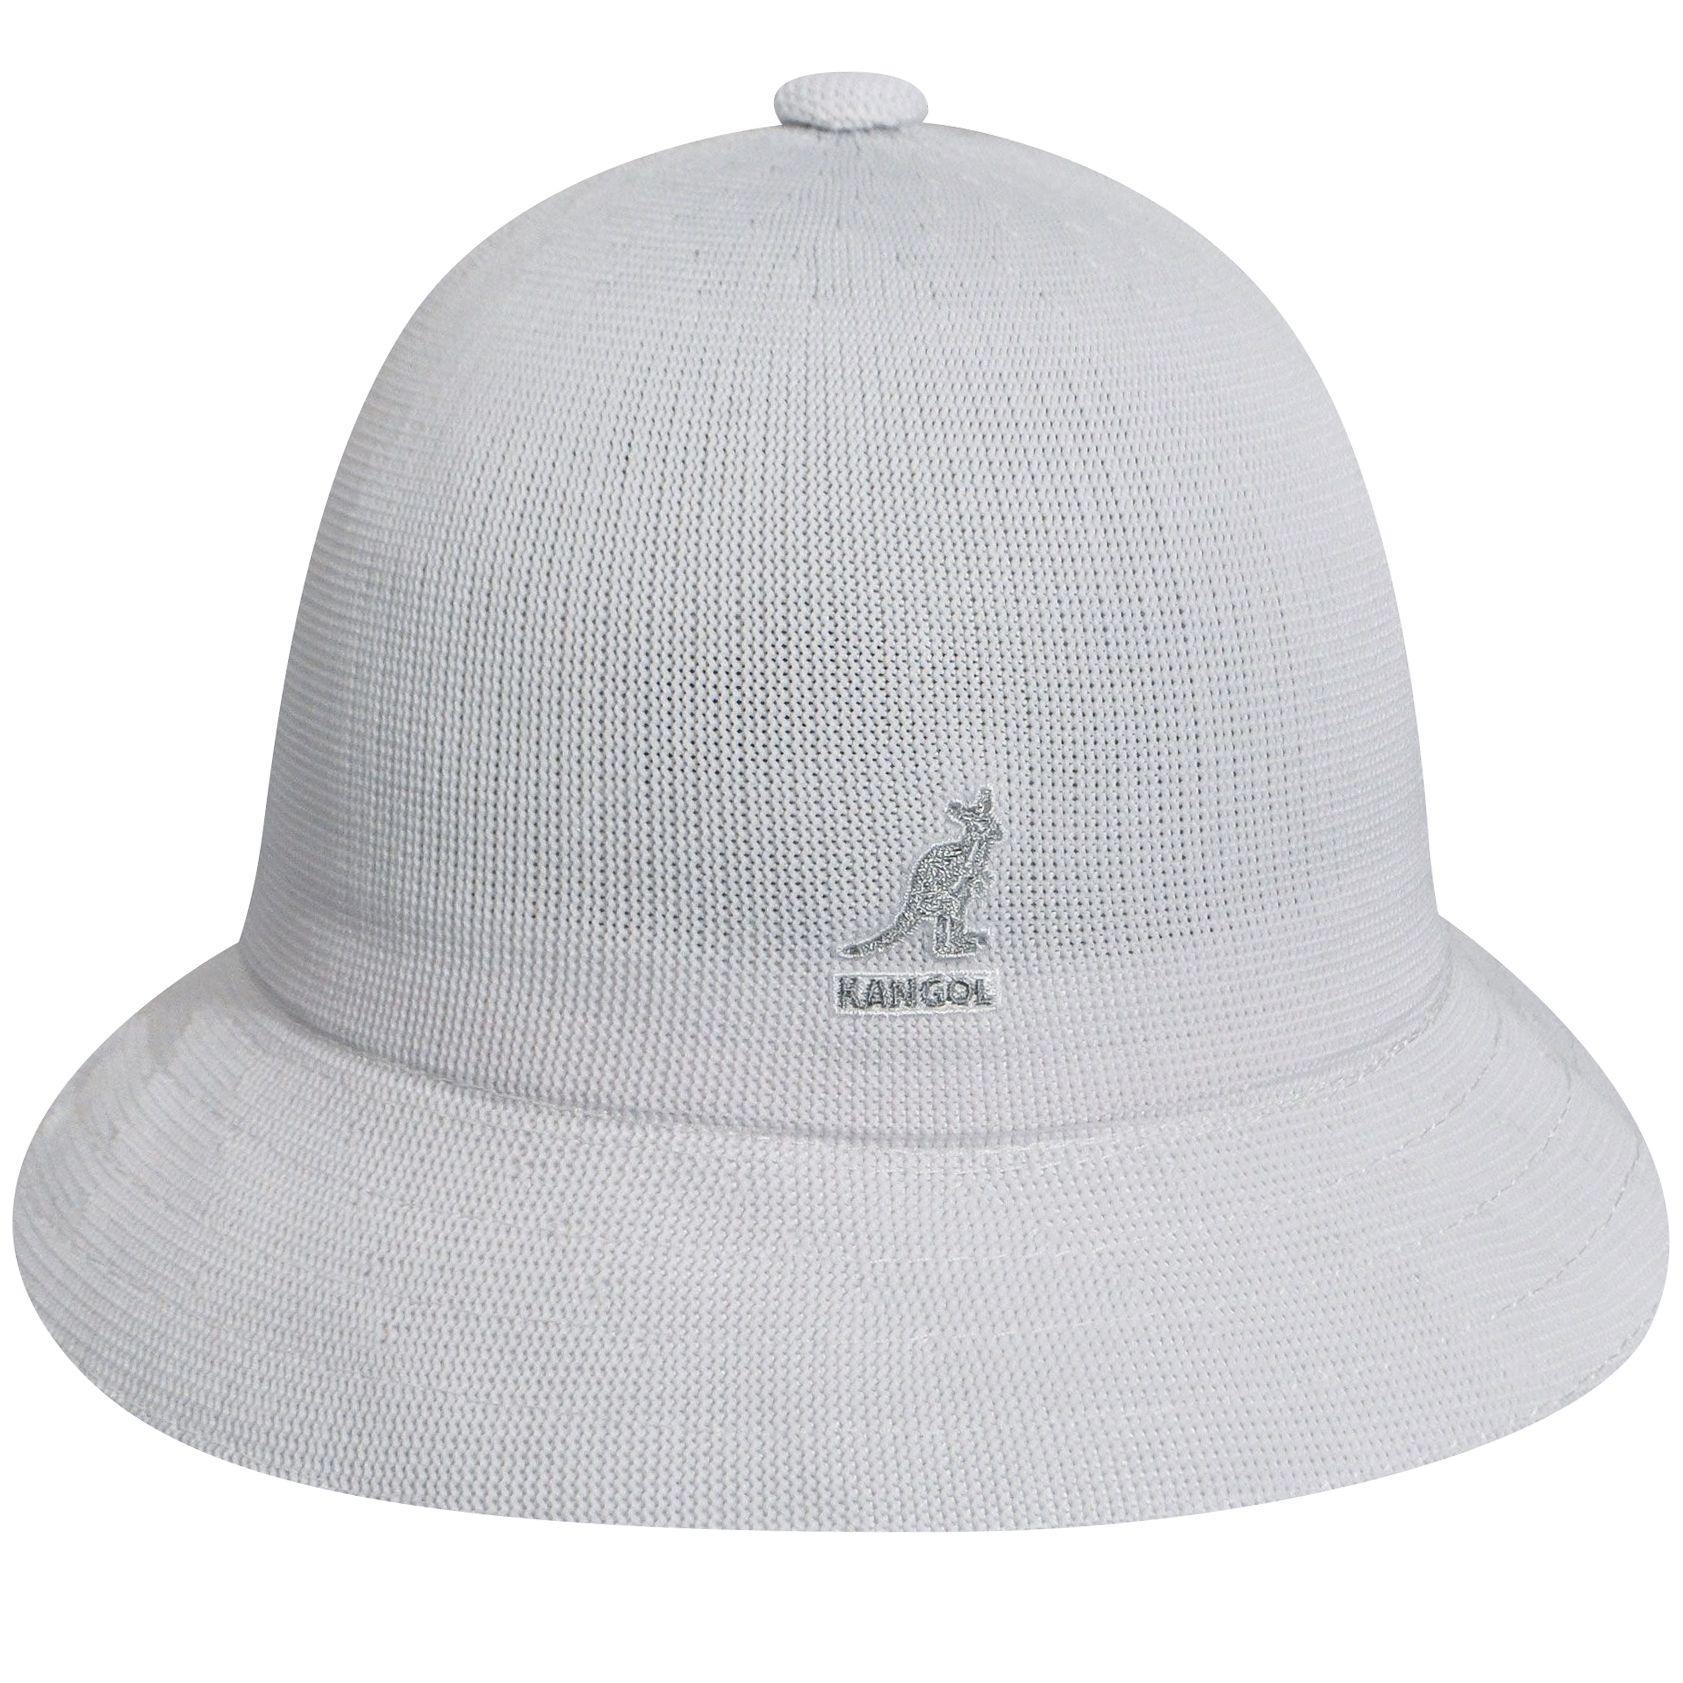 Kangol Mens Tropic Casual Bucket Hat